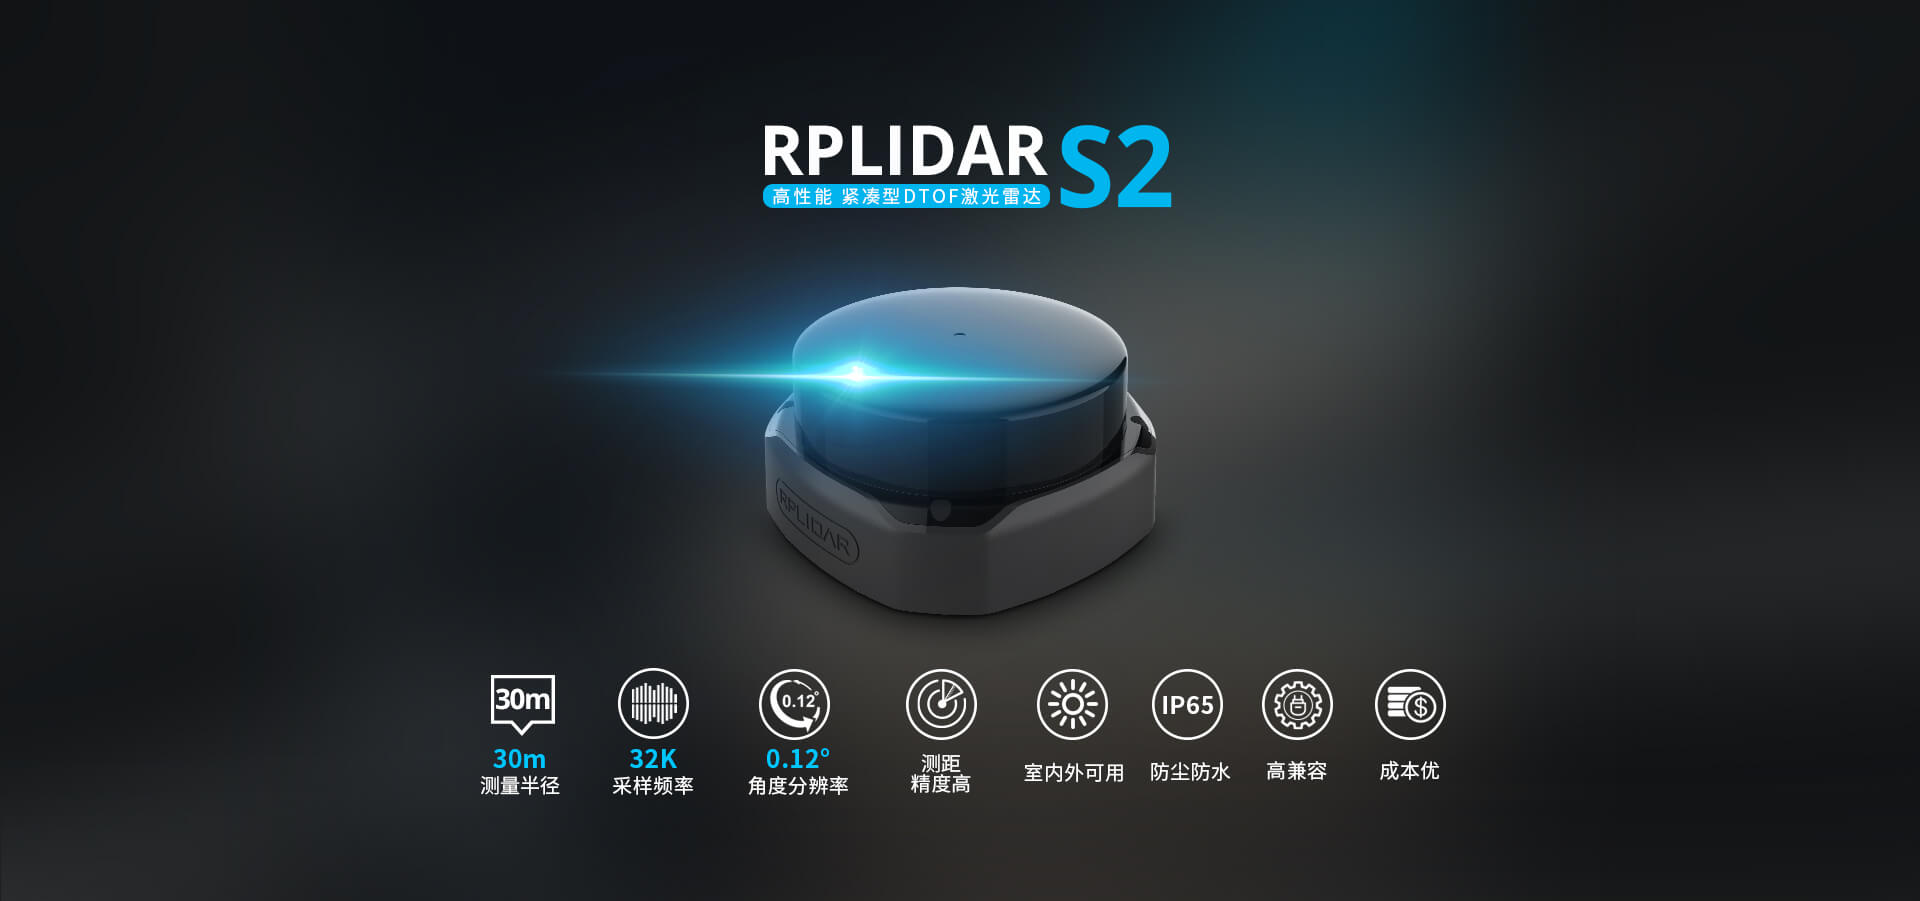 RPLIDAR S2高性能 紧凑型 DTOF激光雷达